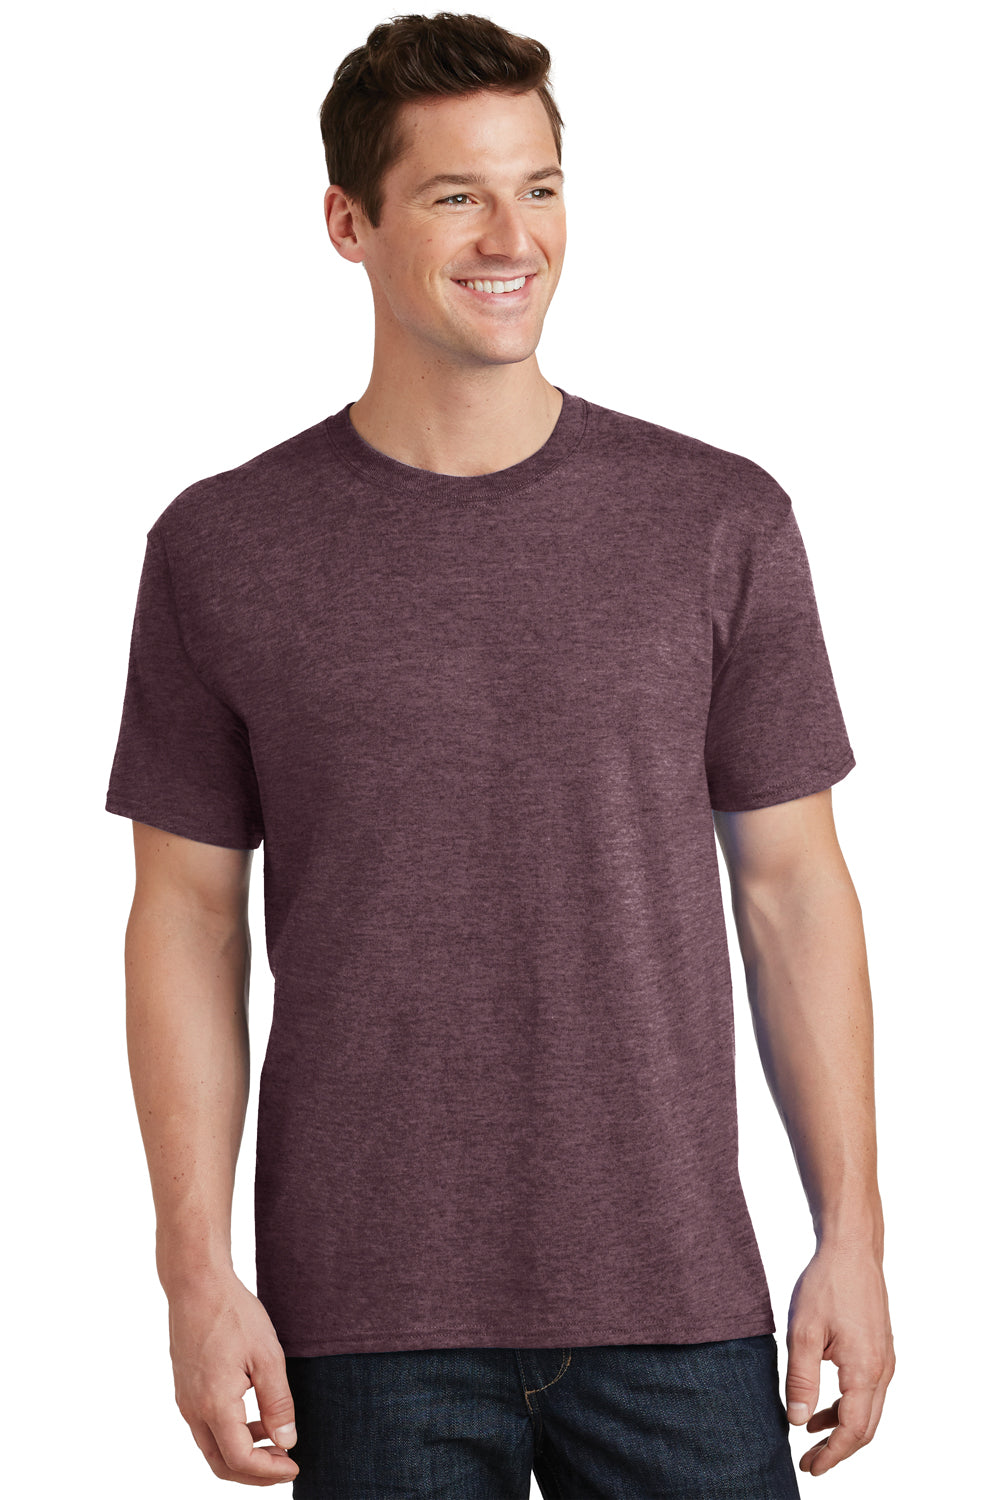 Port & Company PC54 Mens Core Short Sleeve Crewneck T-Shirt Heather Maroon Front